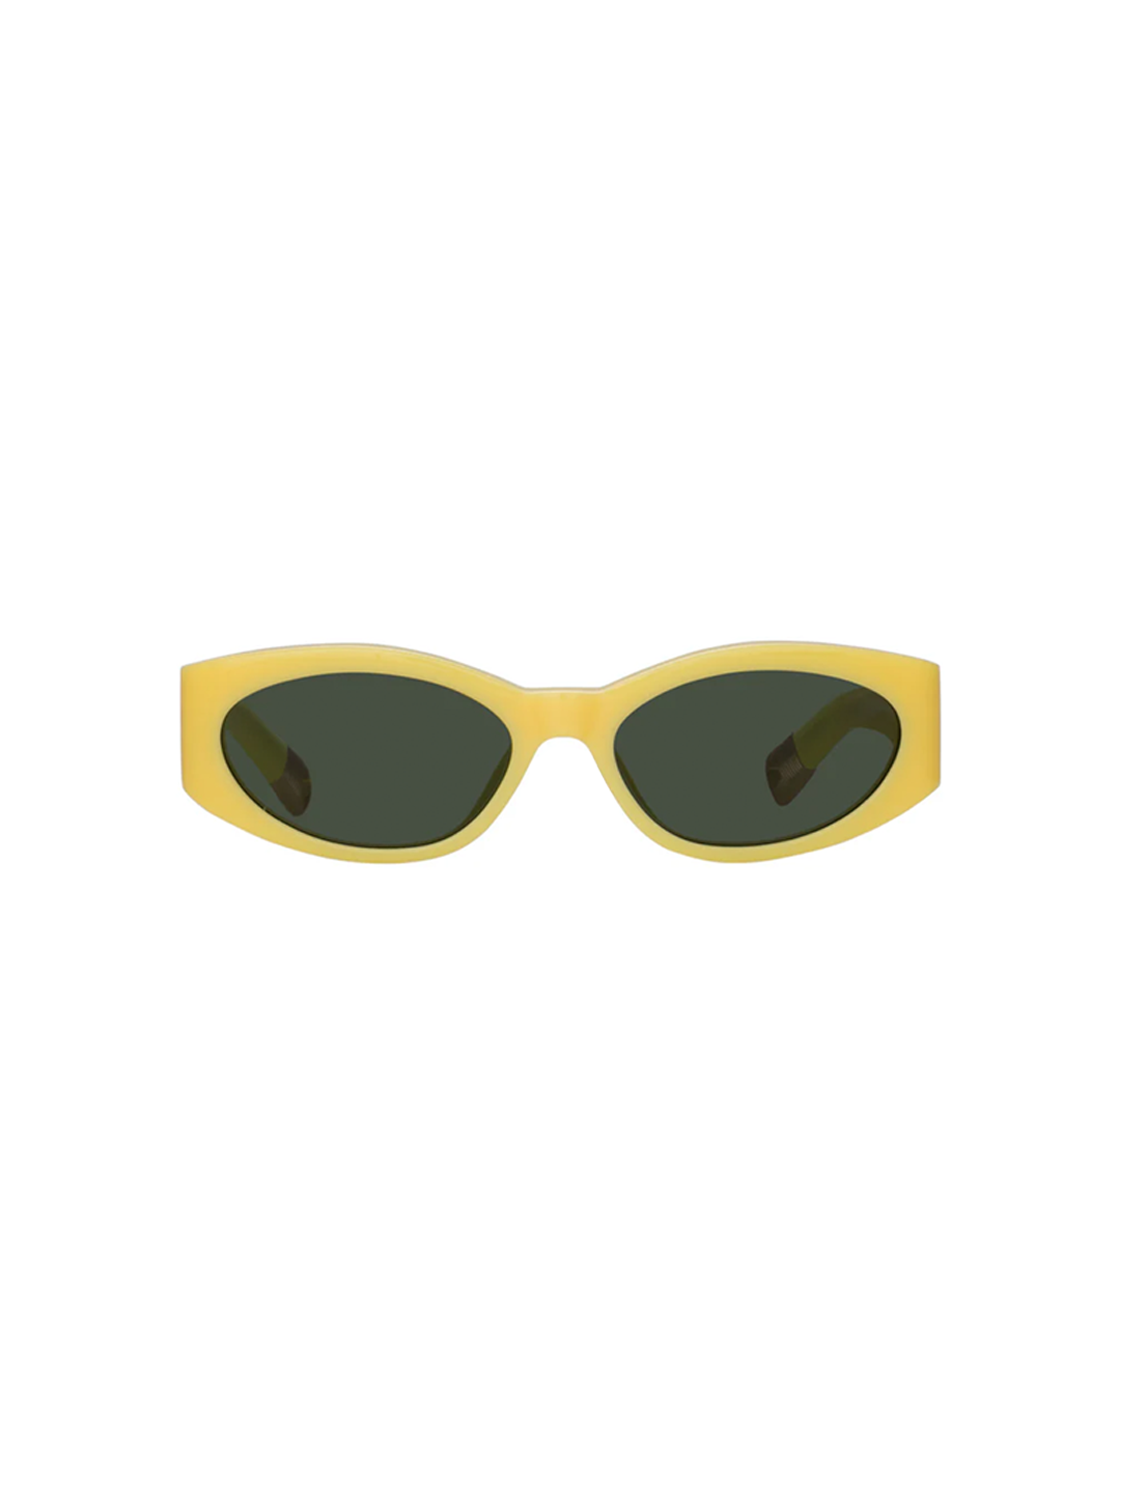 Ovalo – Ovale sunglasses 